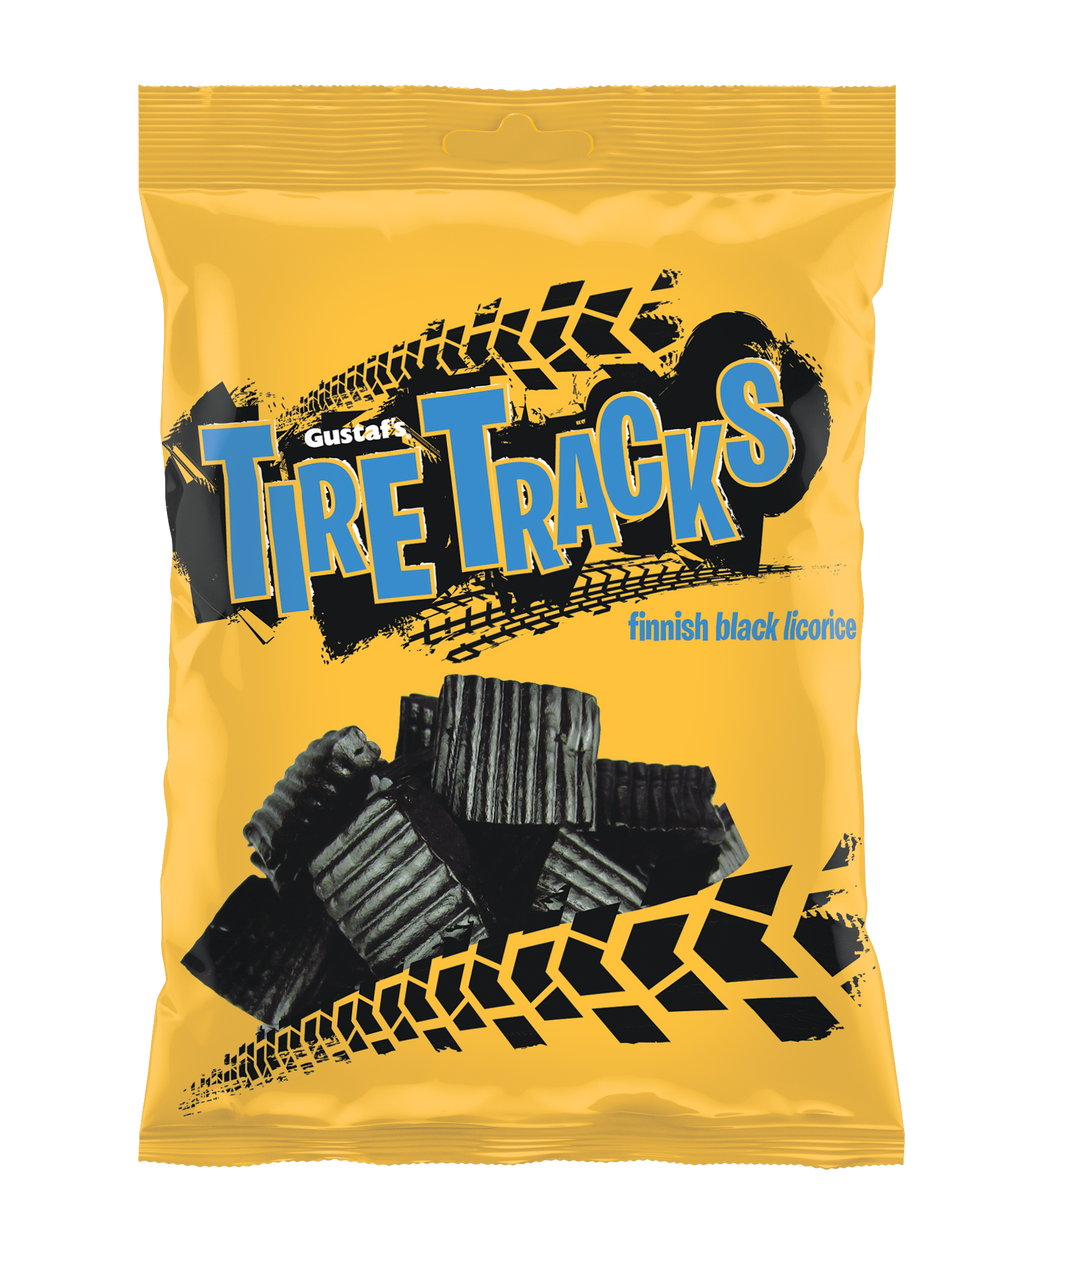 Gustaf's Tire Tracks - Black Licorice Bites - 12 Ct. Box